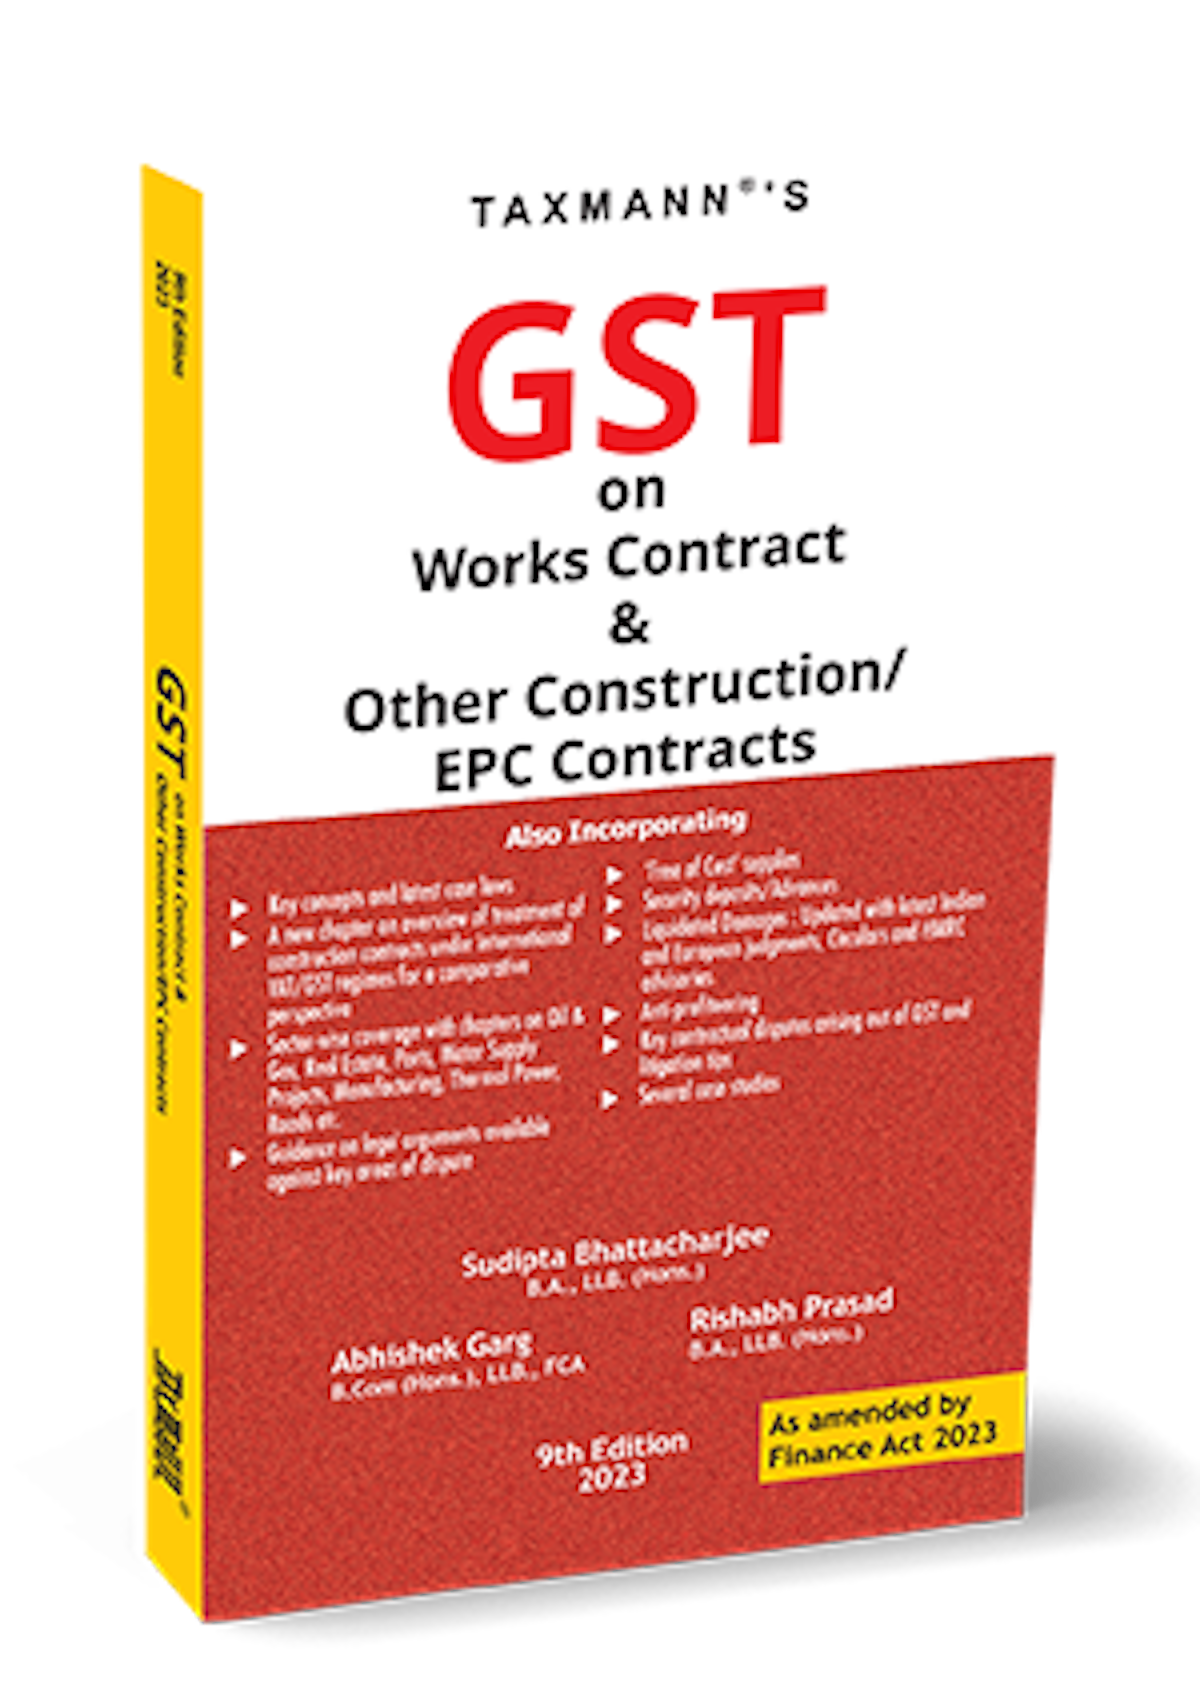 gst-on-works-contract-by-sudipta-bhattacharjee-et-al-taxmann-books